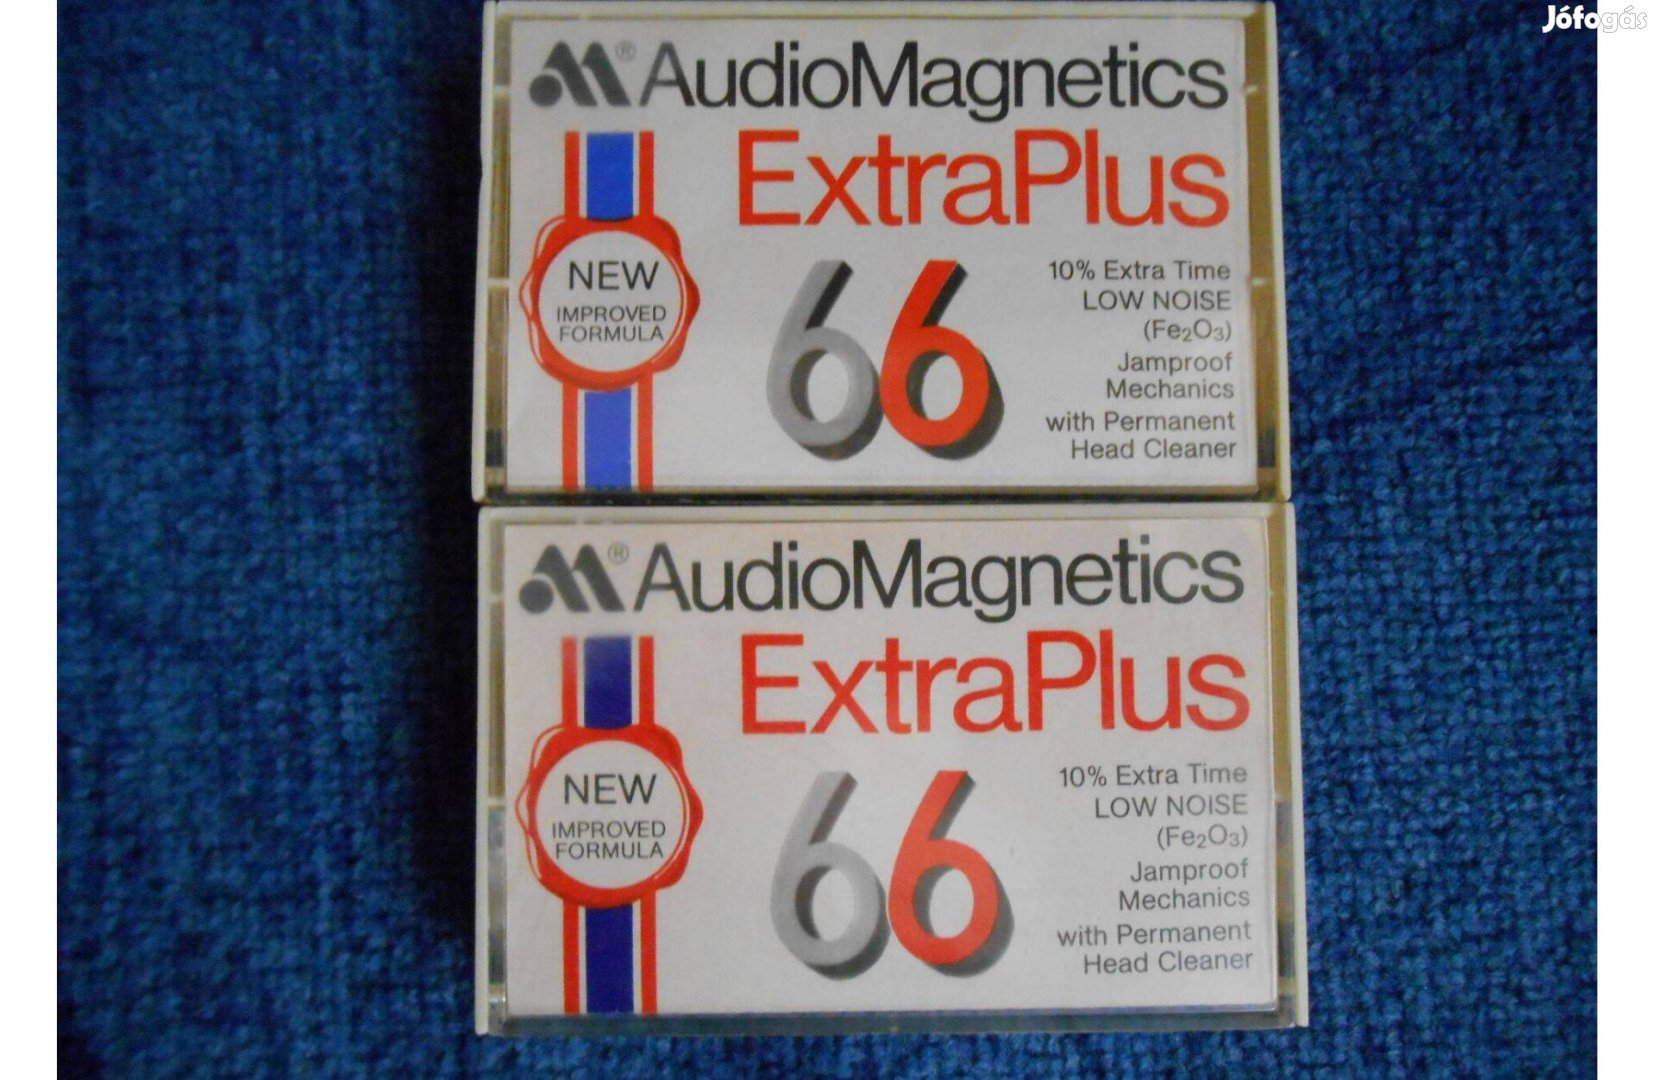 Audio Magnetics Extra Plus 66 kazetták